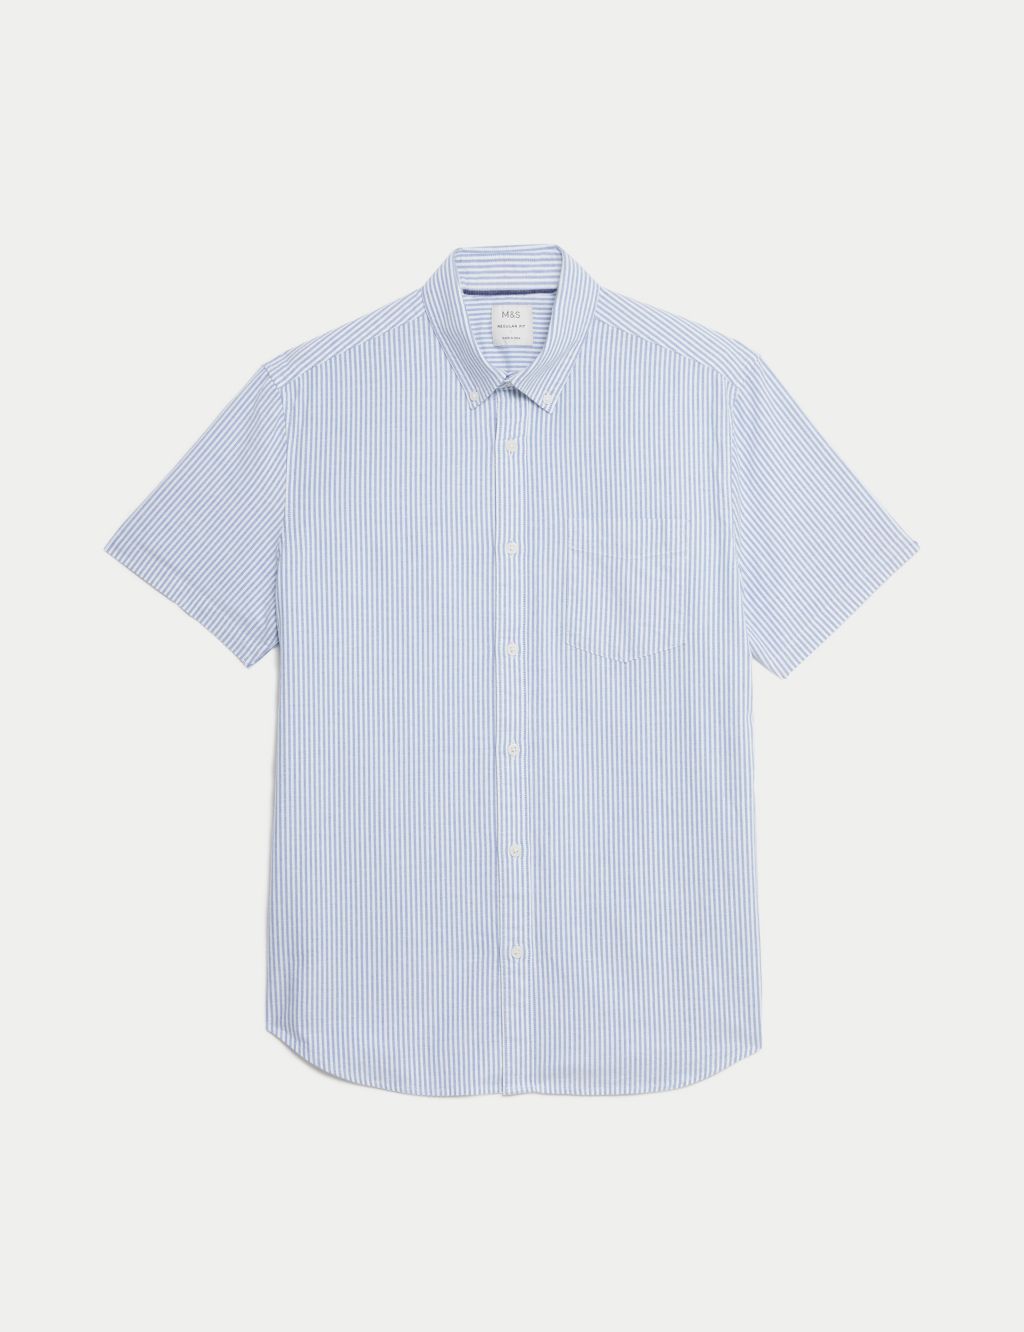 Pure Cotton Striped Oxford Shirt image 2